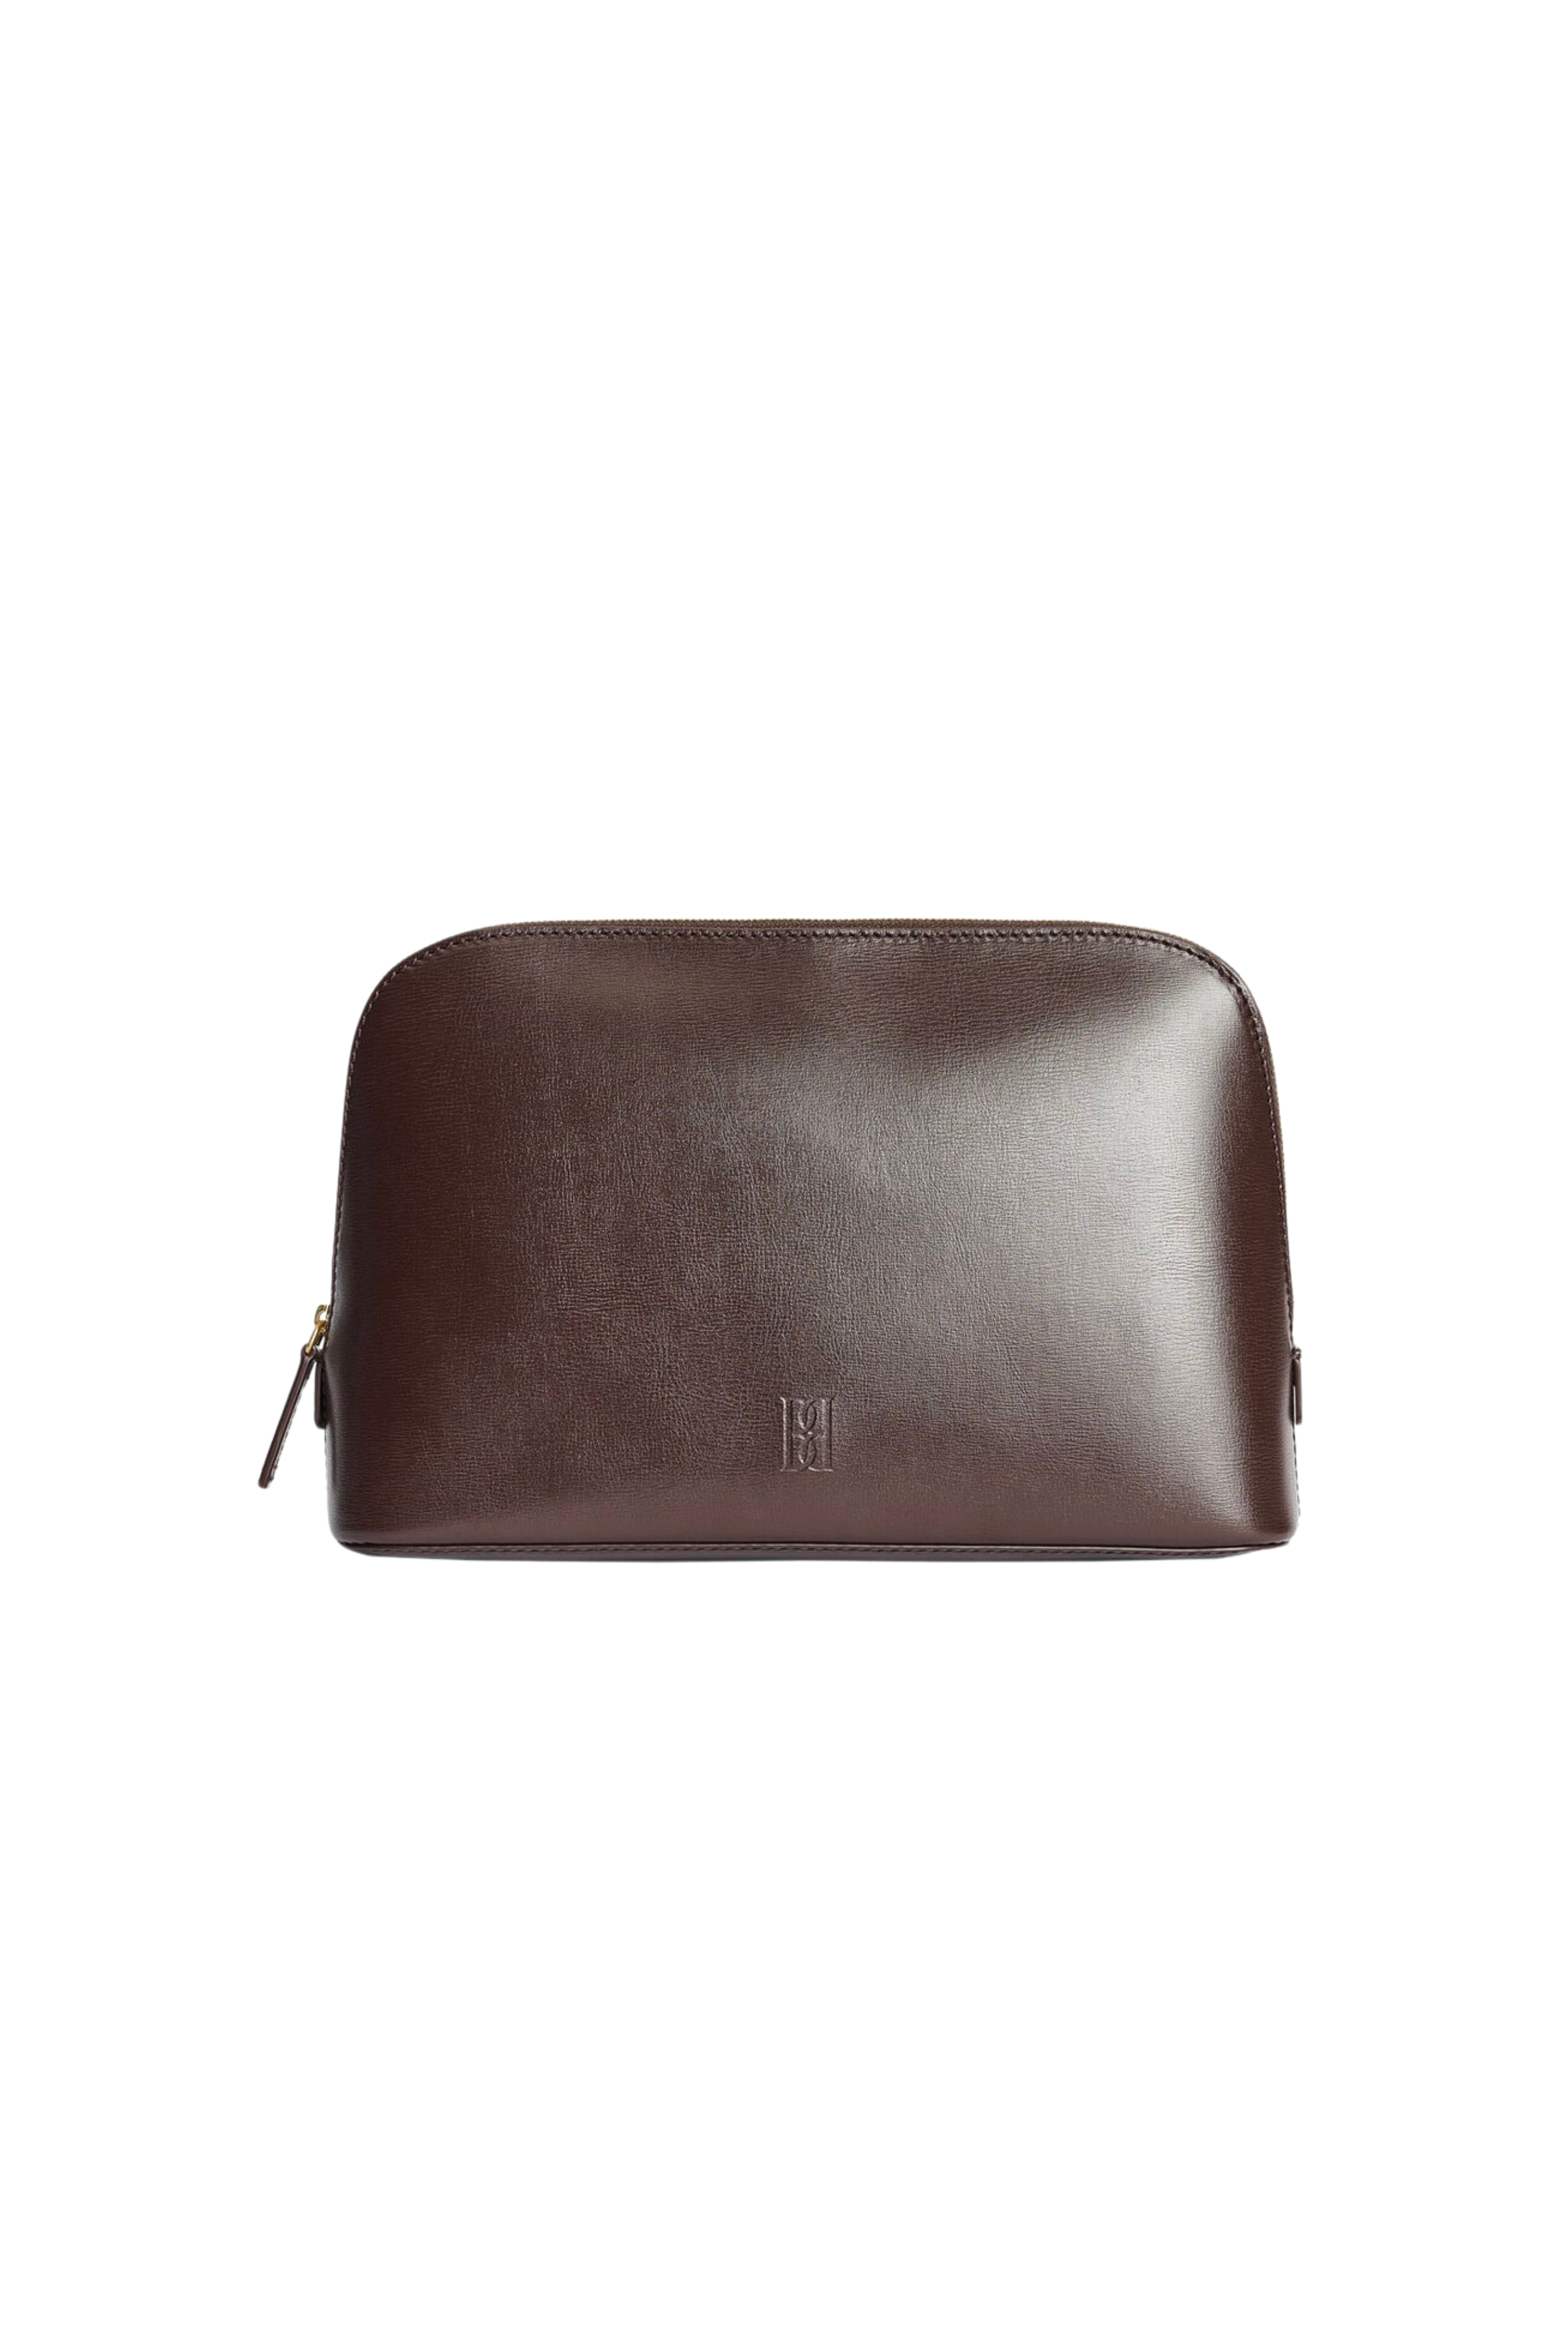 90s VTG Sarne Purse Brown Tote Bag | Brown tote bag, Brown tote, Large  black tote bag